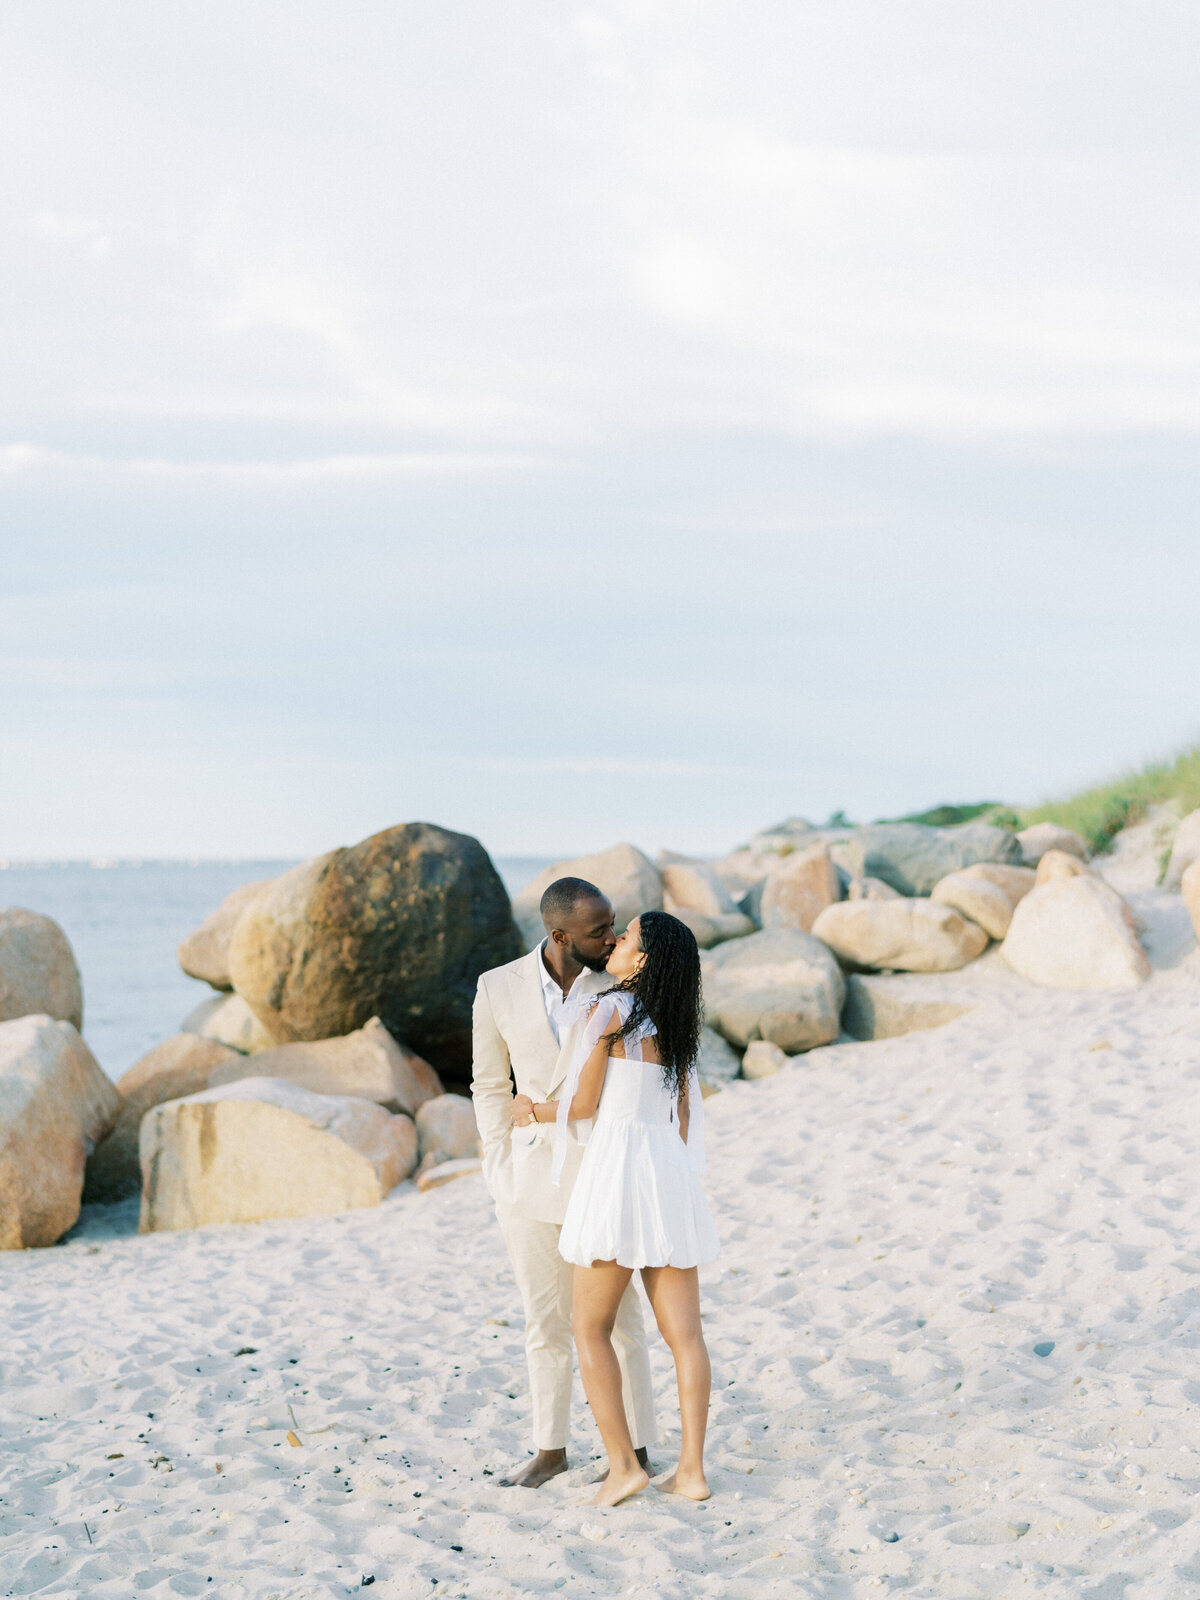 Summer Martha's Vineyard Engagement Session On The Beach | Amarachi Ikeji Photography 26